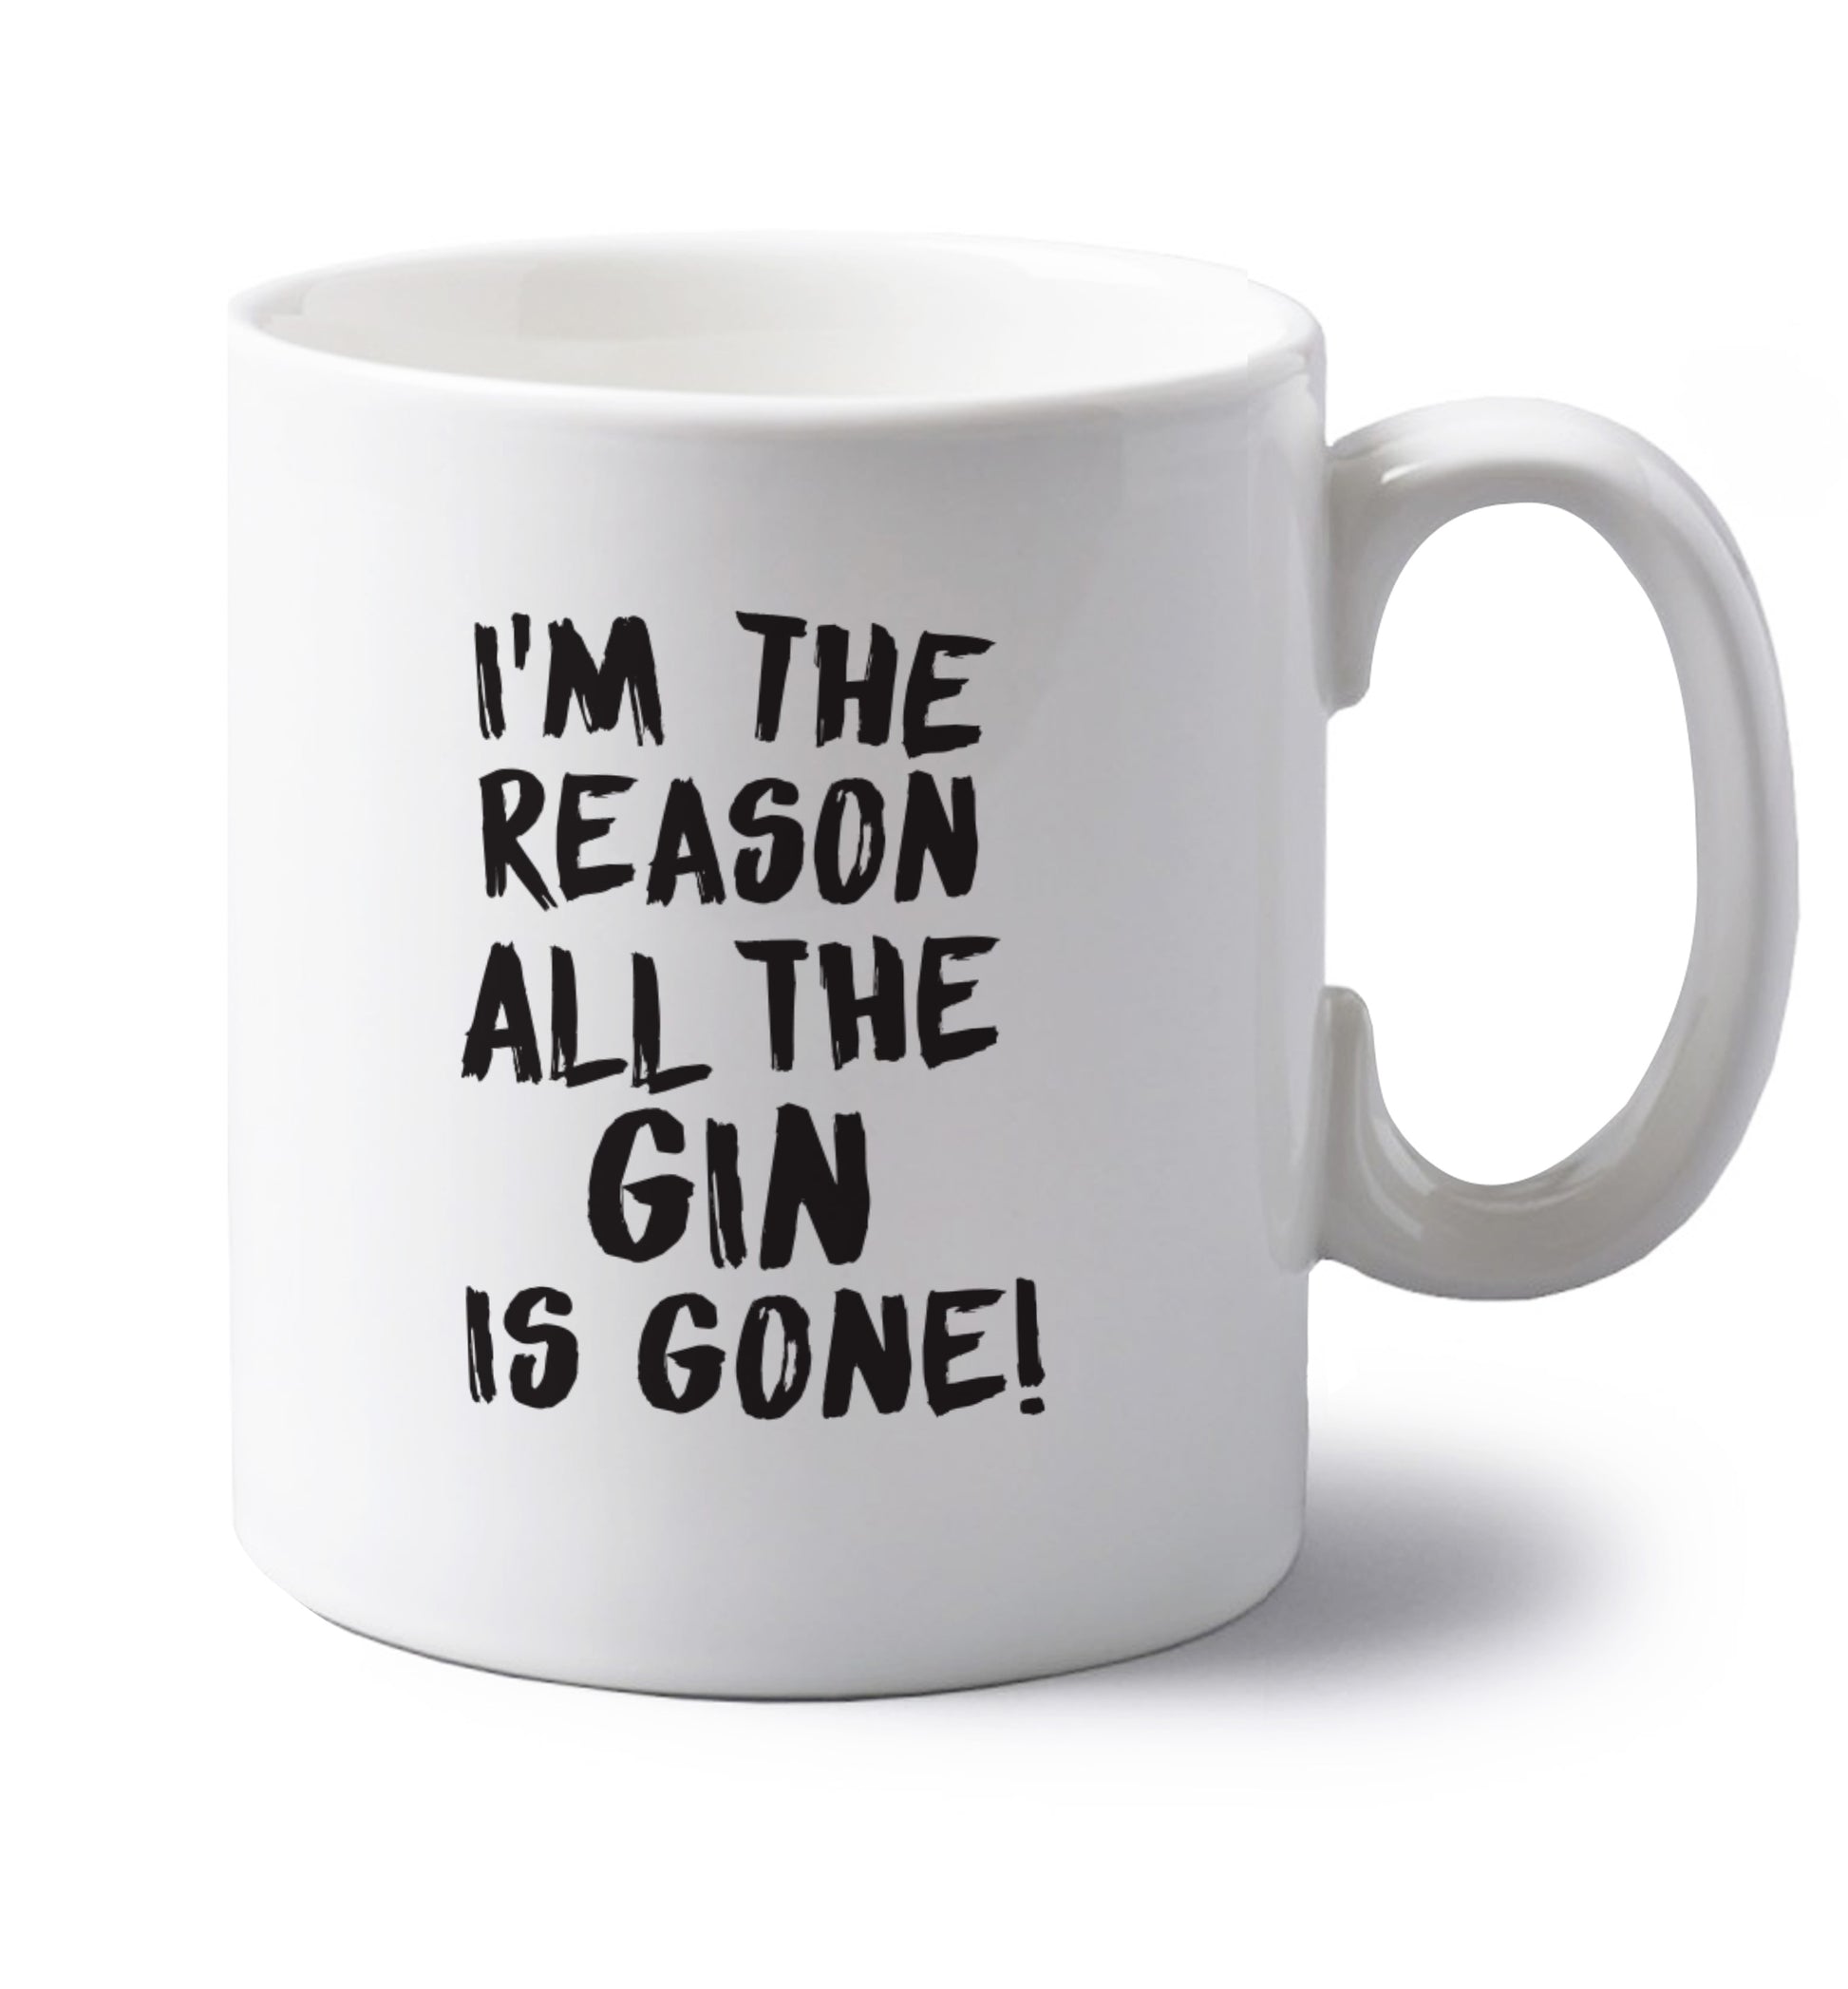 I'm the reason all the gin is gone left handed white ceramic mug 